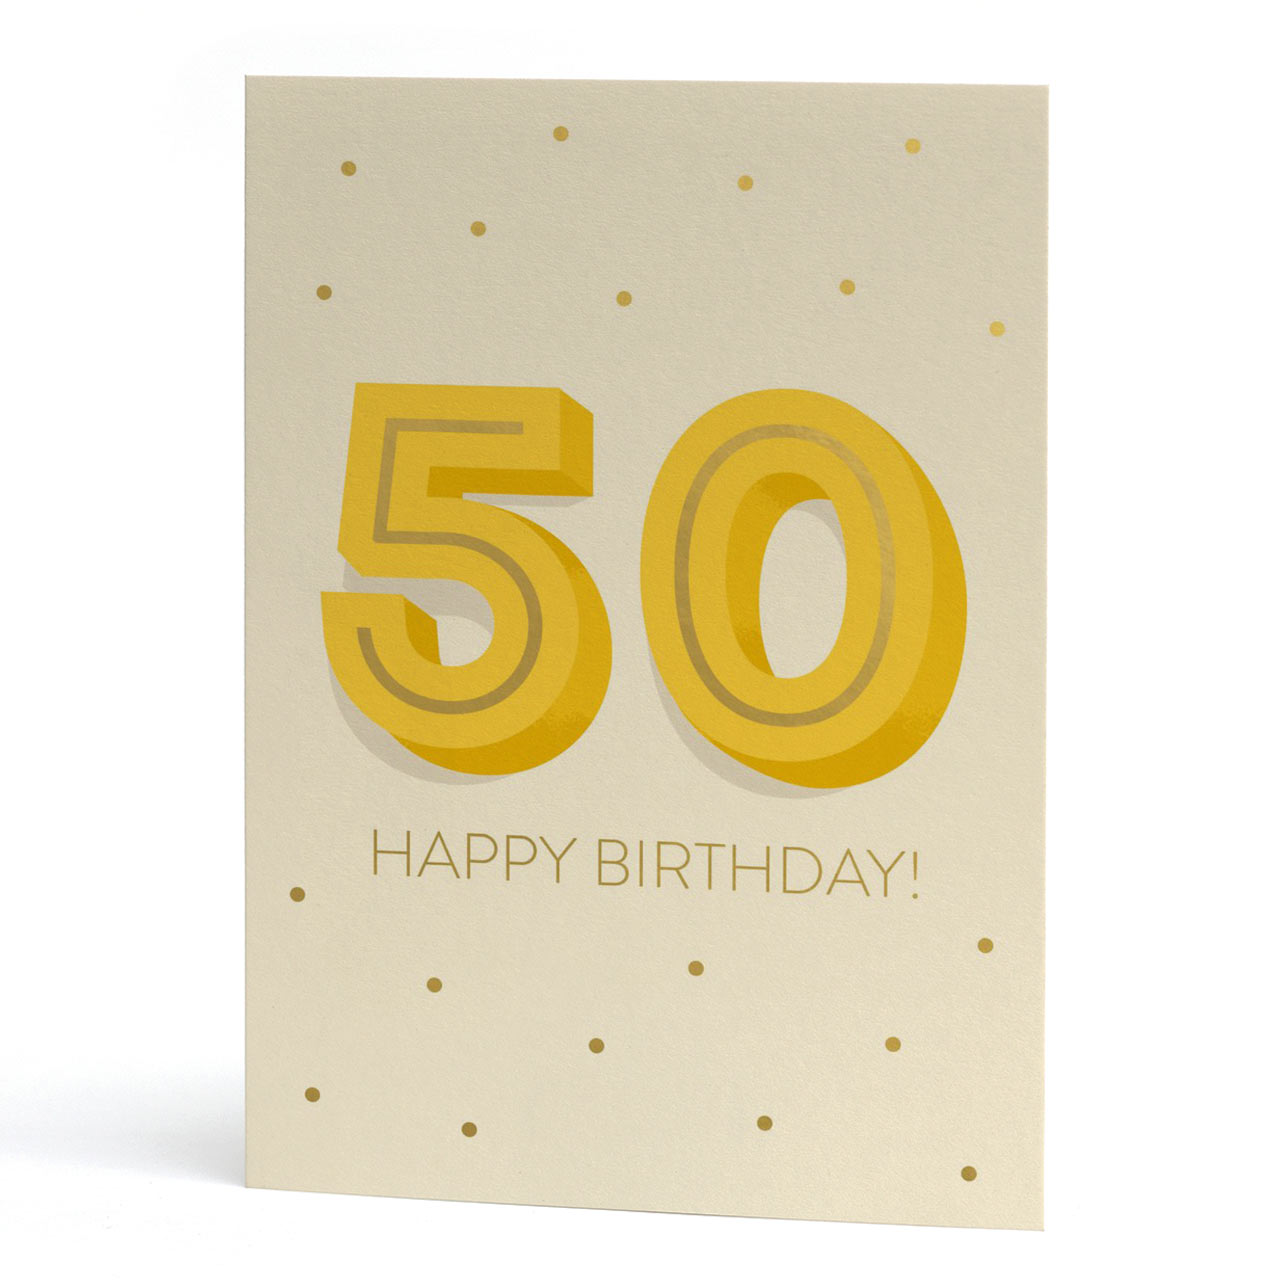 Big 50th Birthday Gold Foil Greeting Card